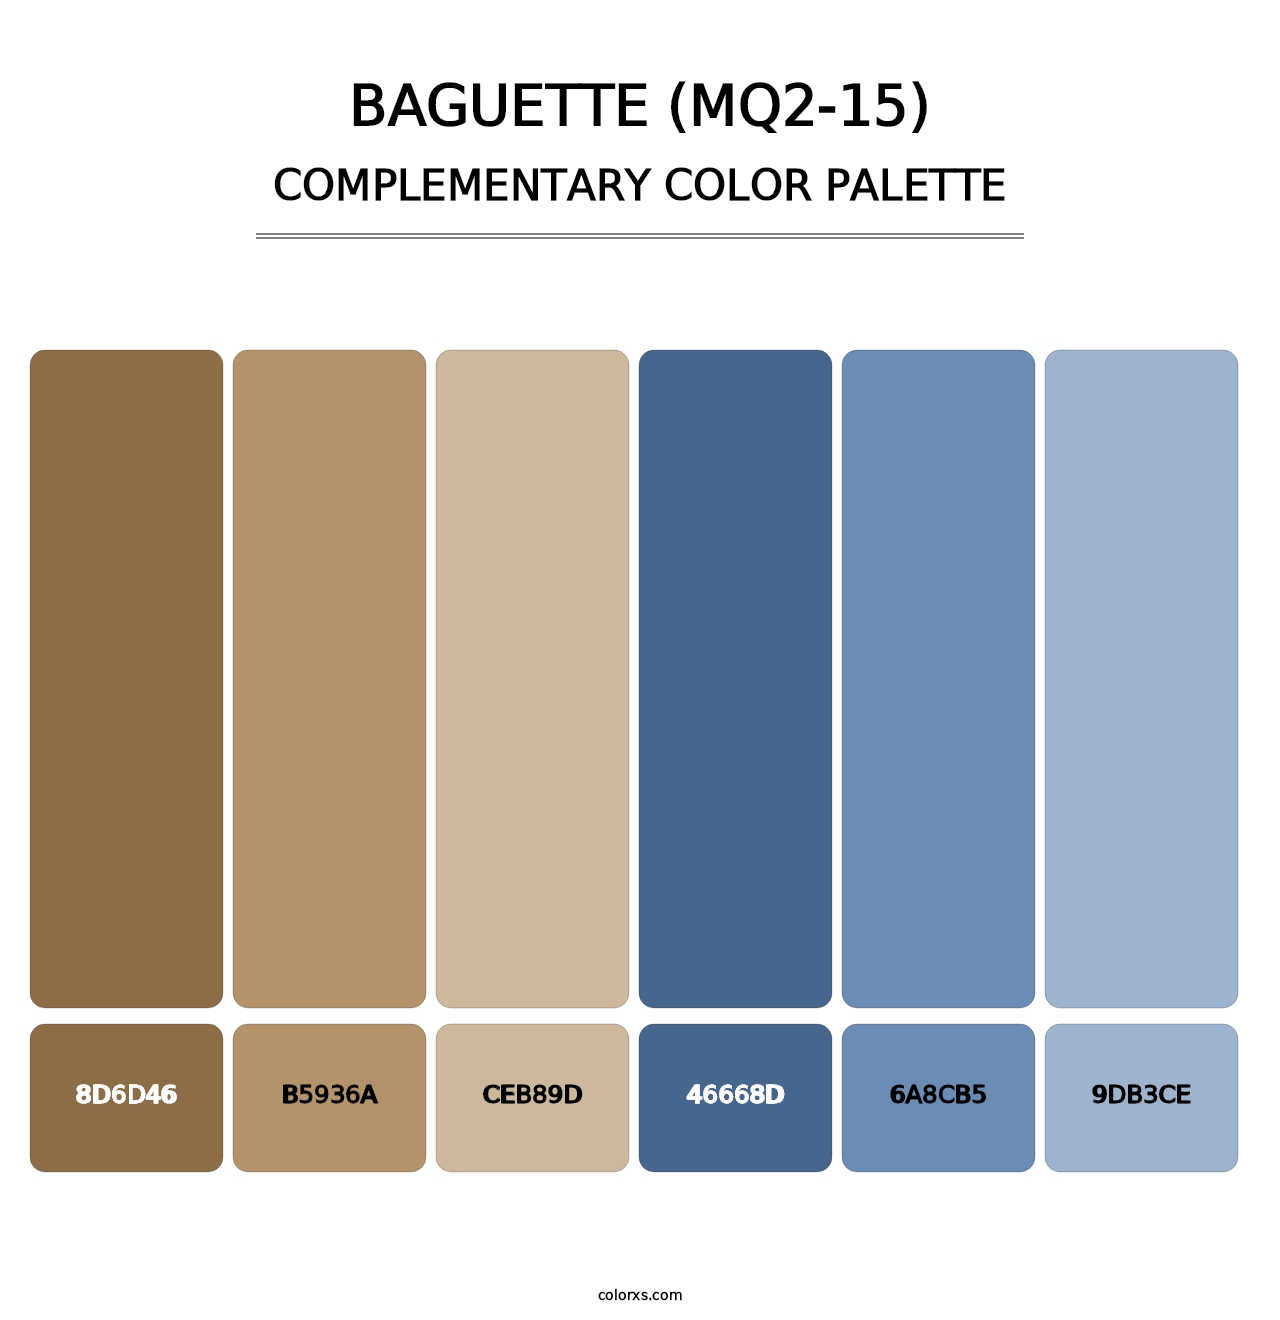 Baguette (MQ2-15) - Complementary Color Palette